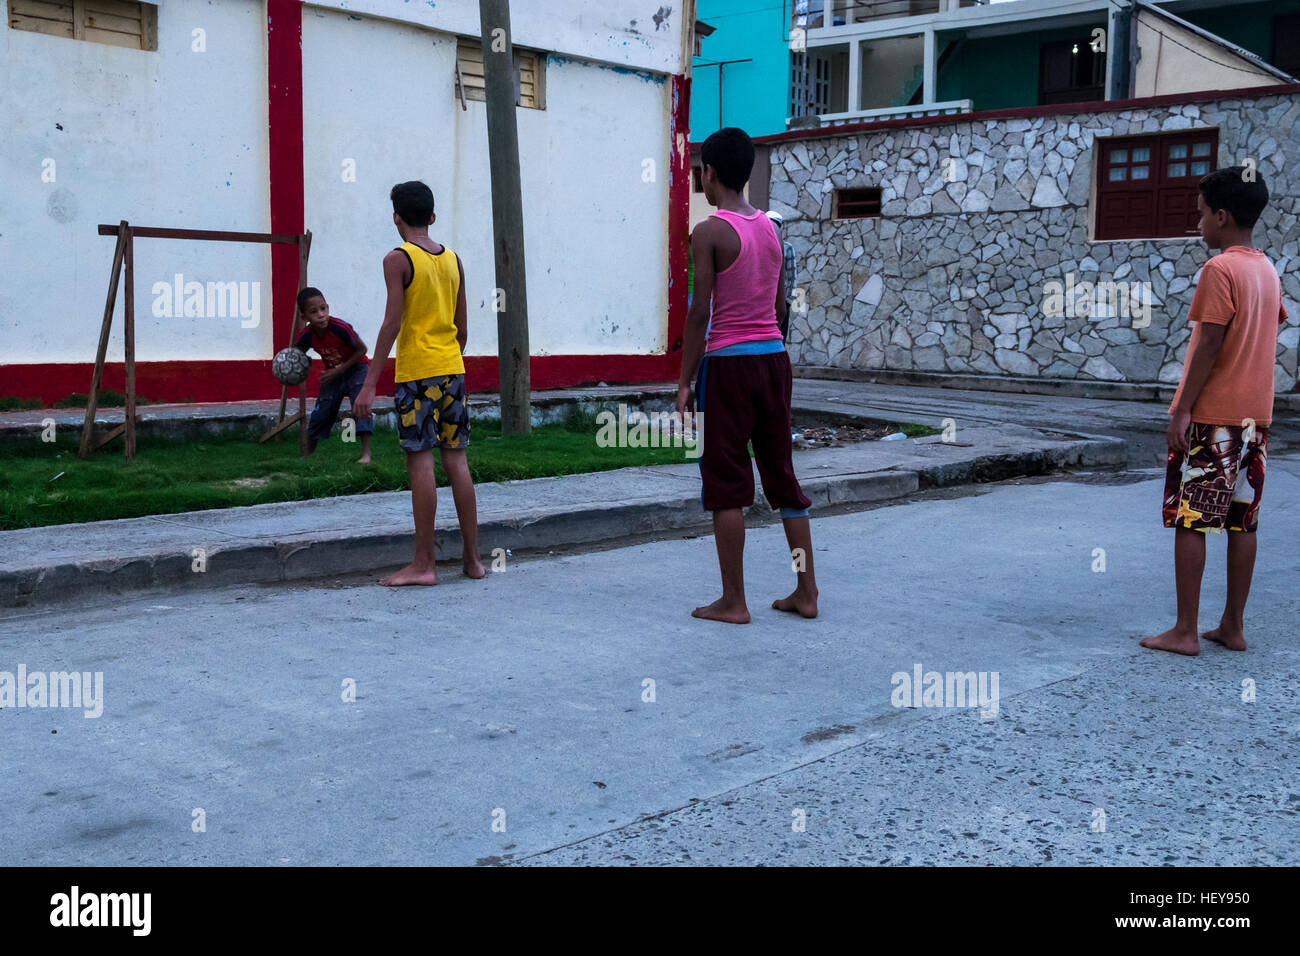 Boys playing football barefoot in the street, Baracoa, Cuba Stock Photo